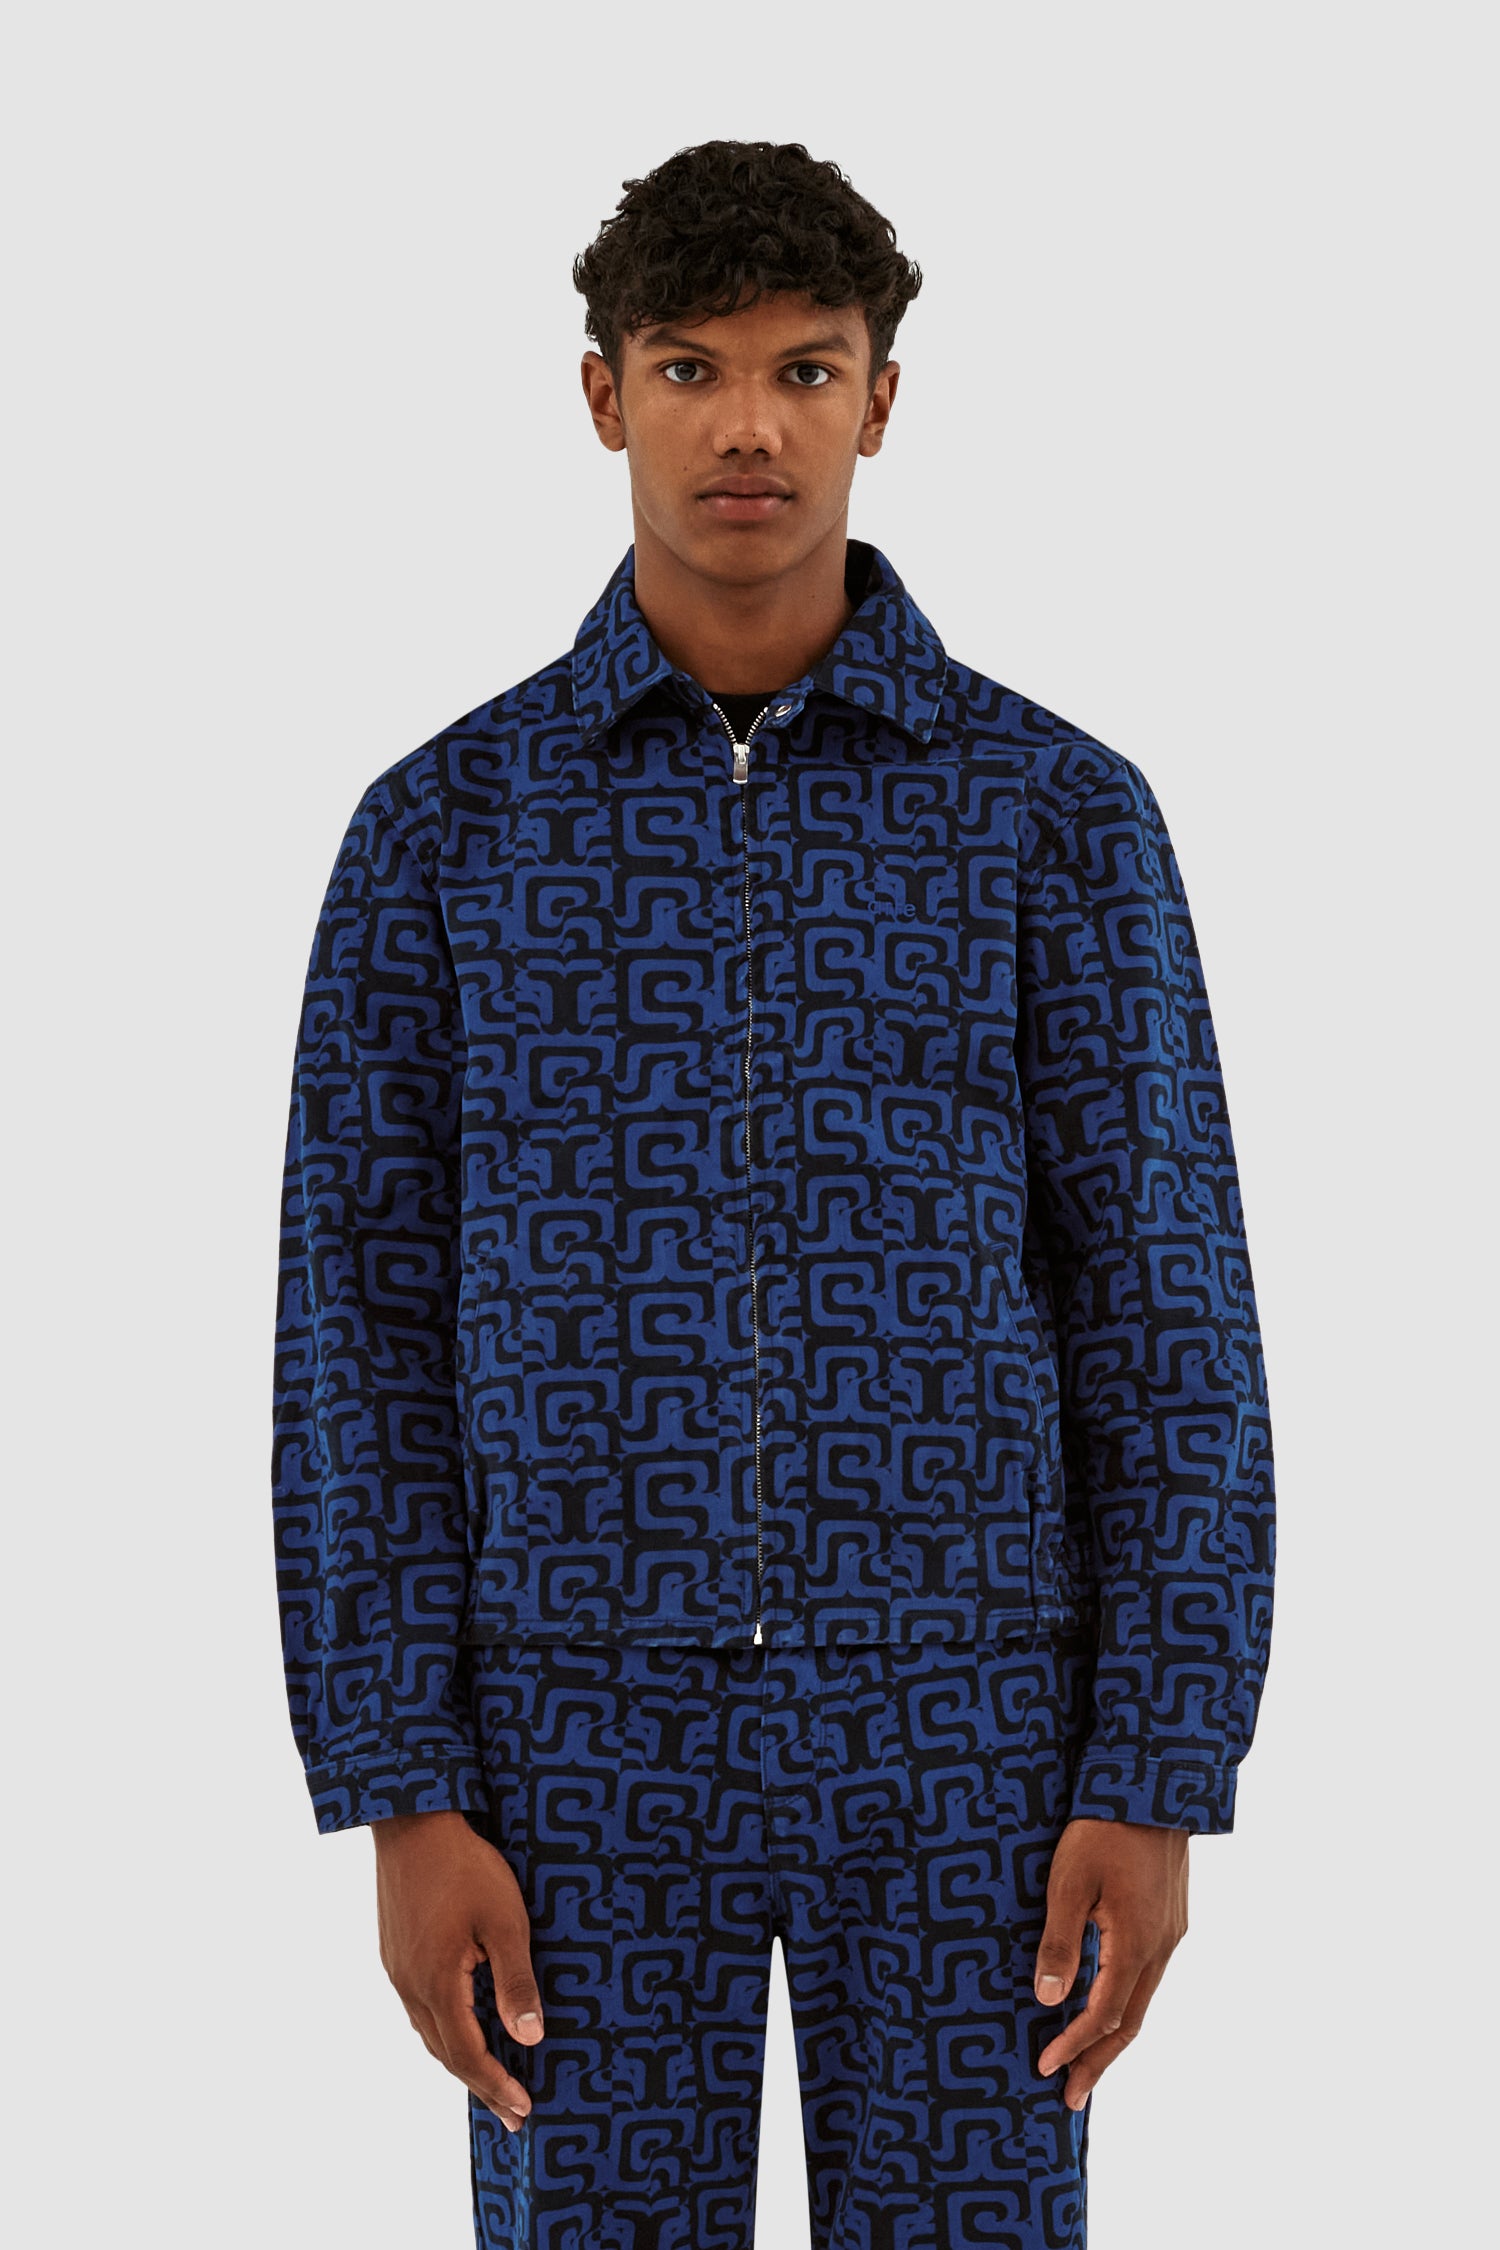 Louis Vuitton  Blue Men Monogram Jacquard Fleece Zip Through Nuit